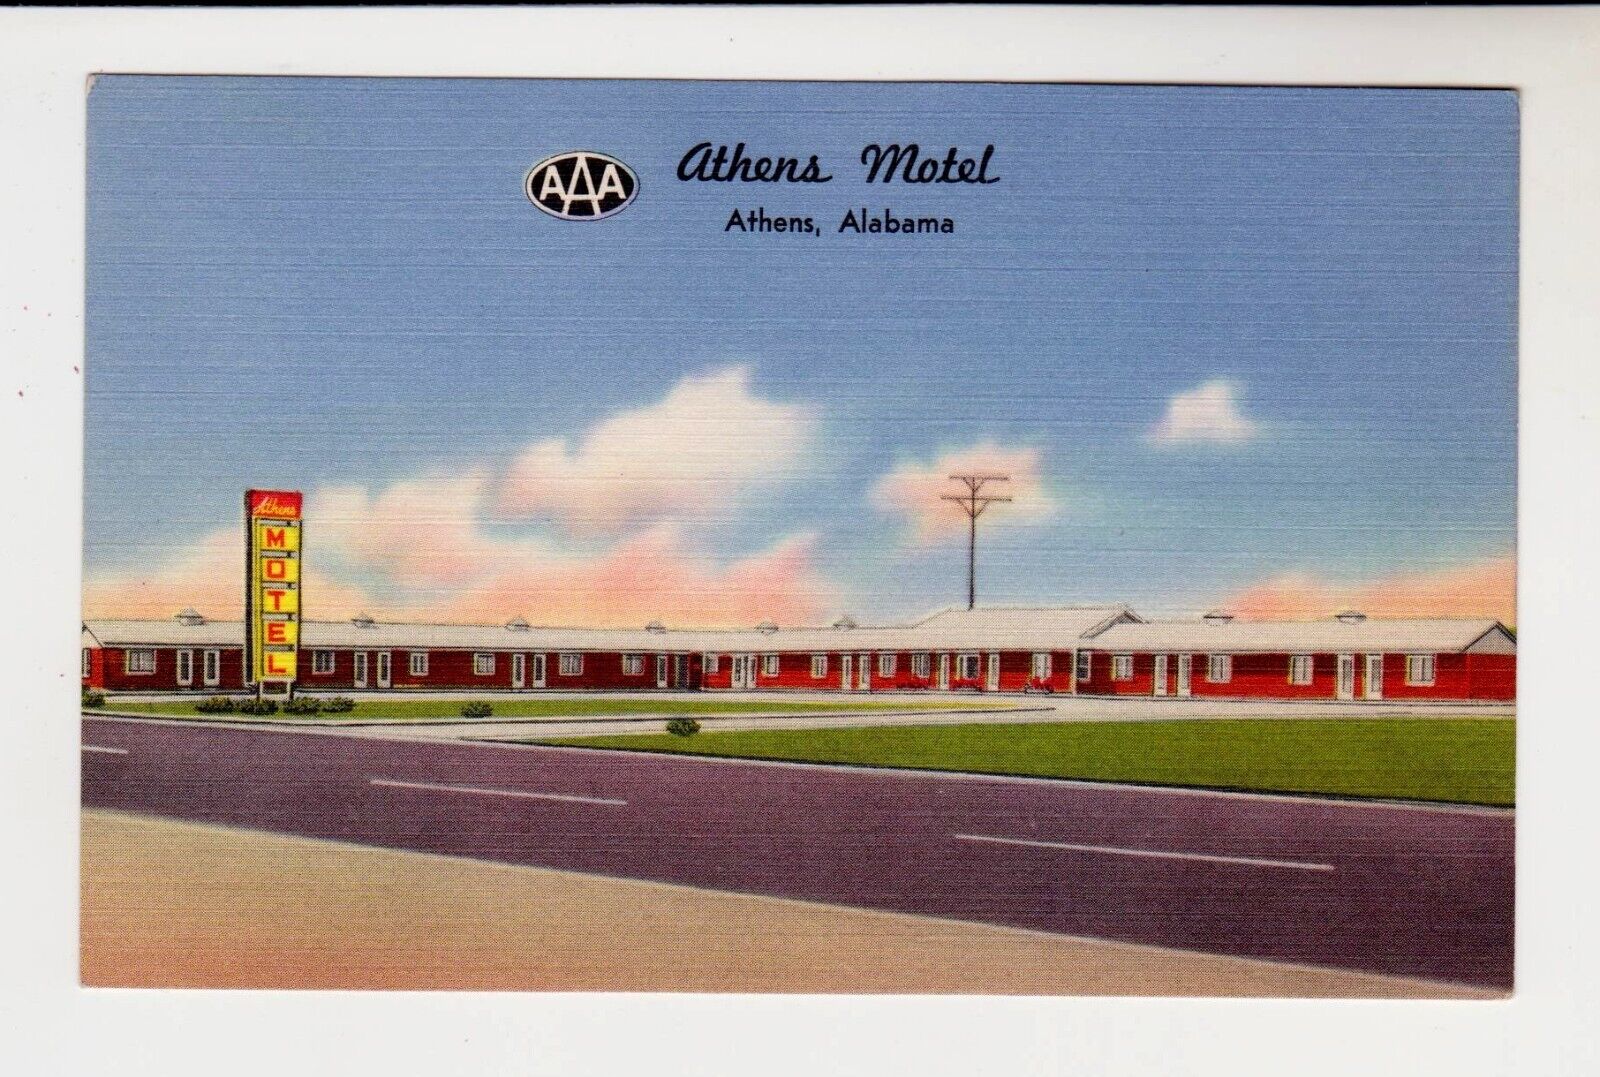 ATHENS MOTEL, ATHENS, ALABAMA – Jct. Hwys. 31-72 - 1940s Linen Postcard